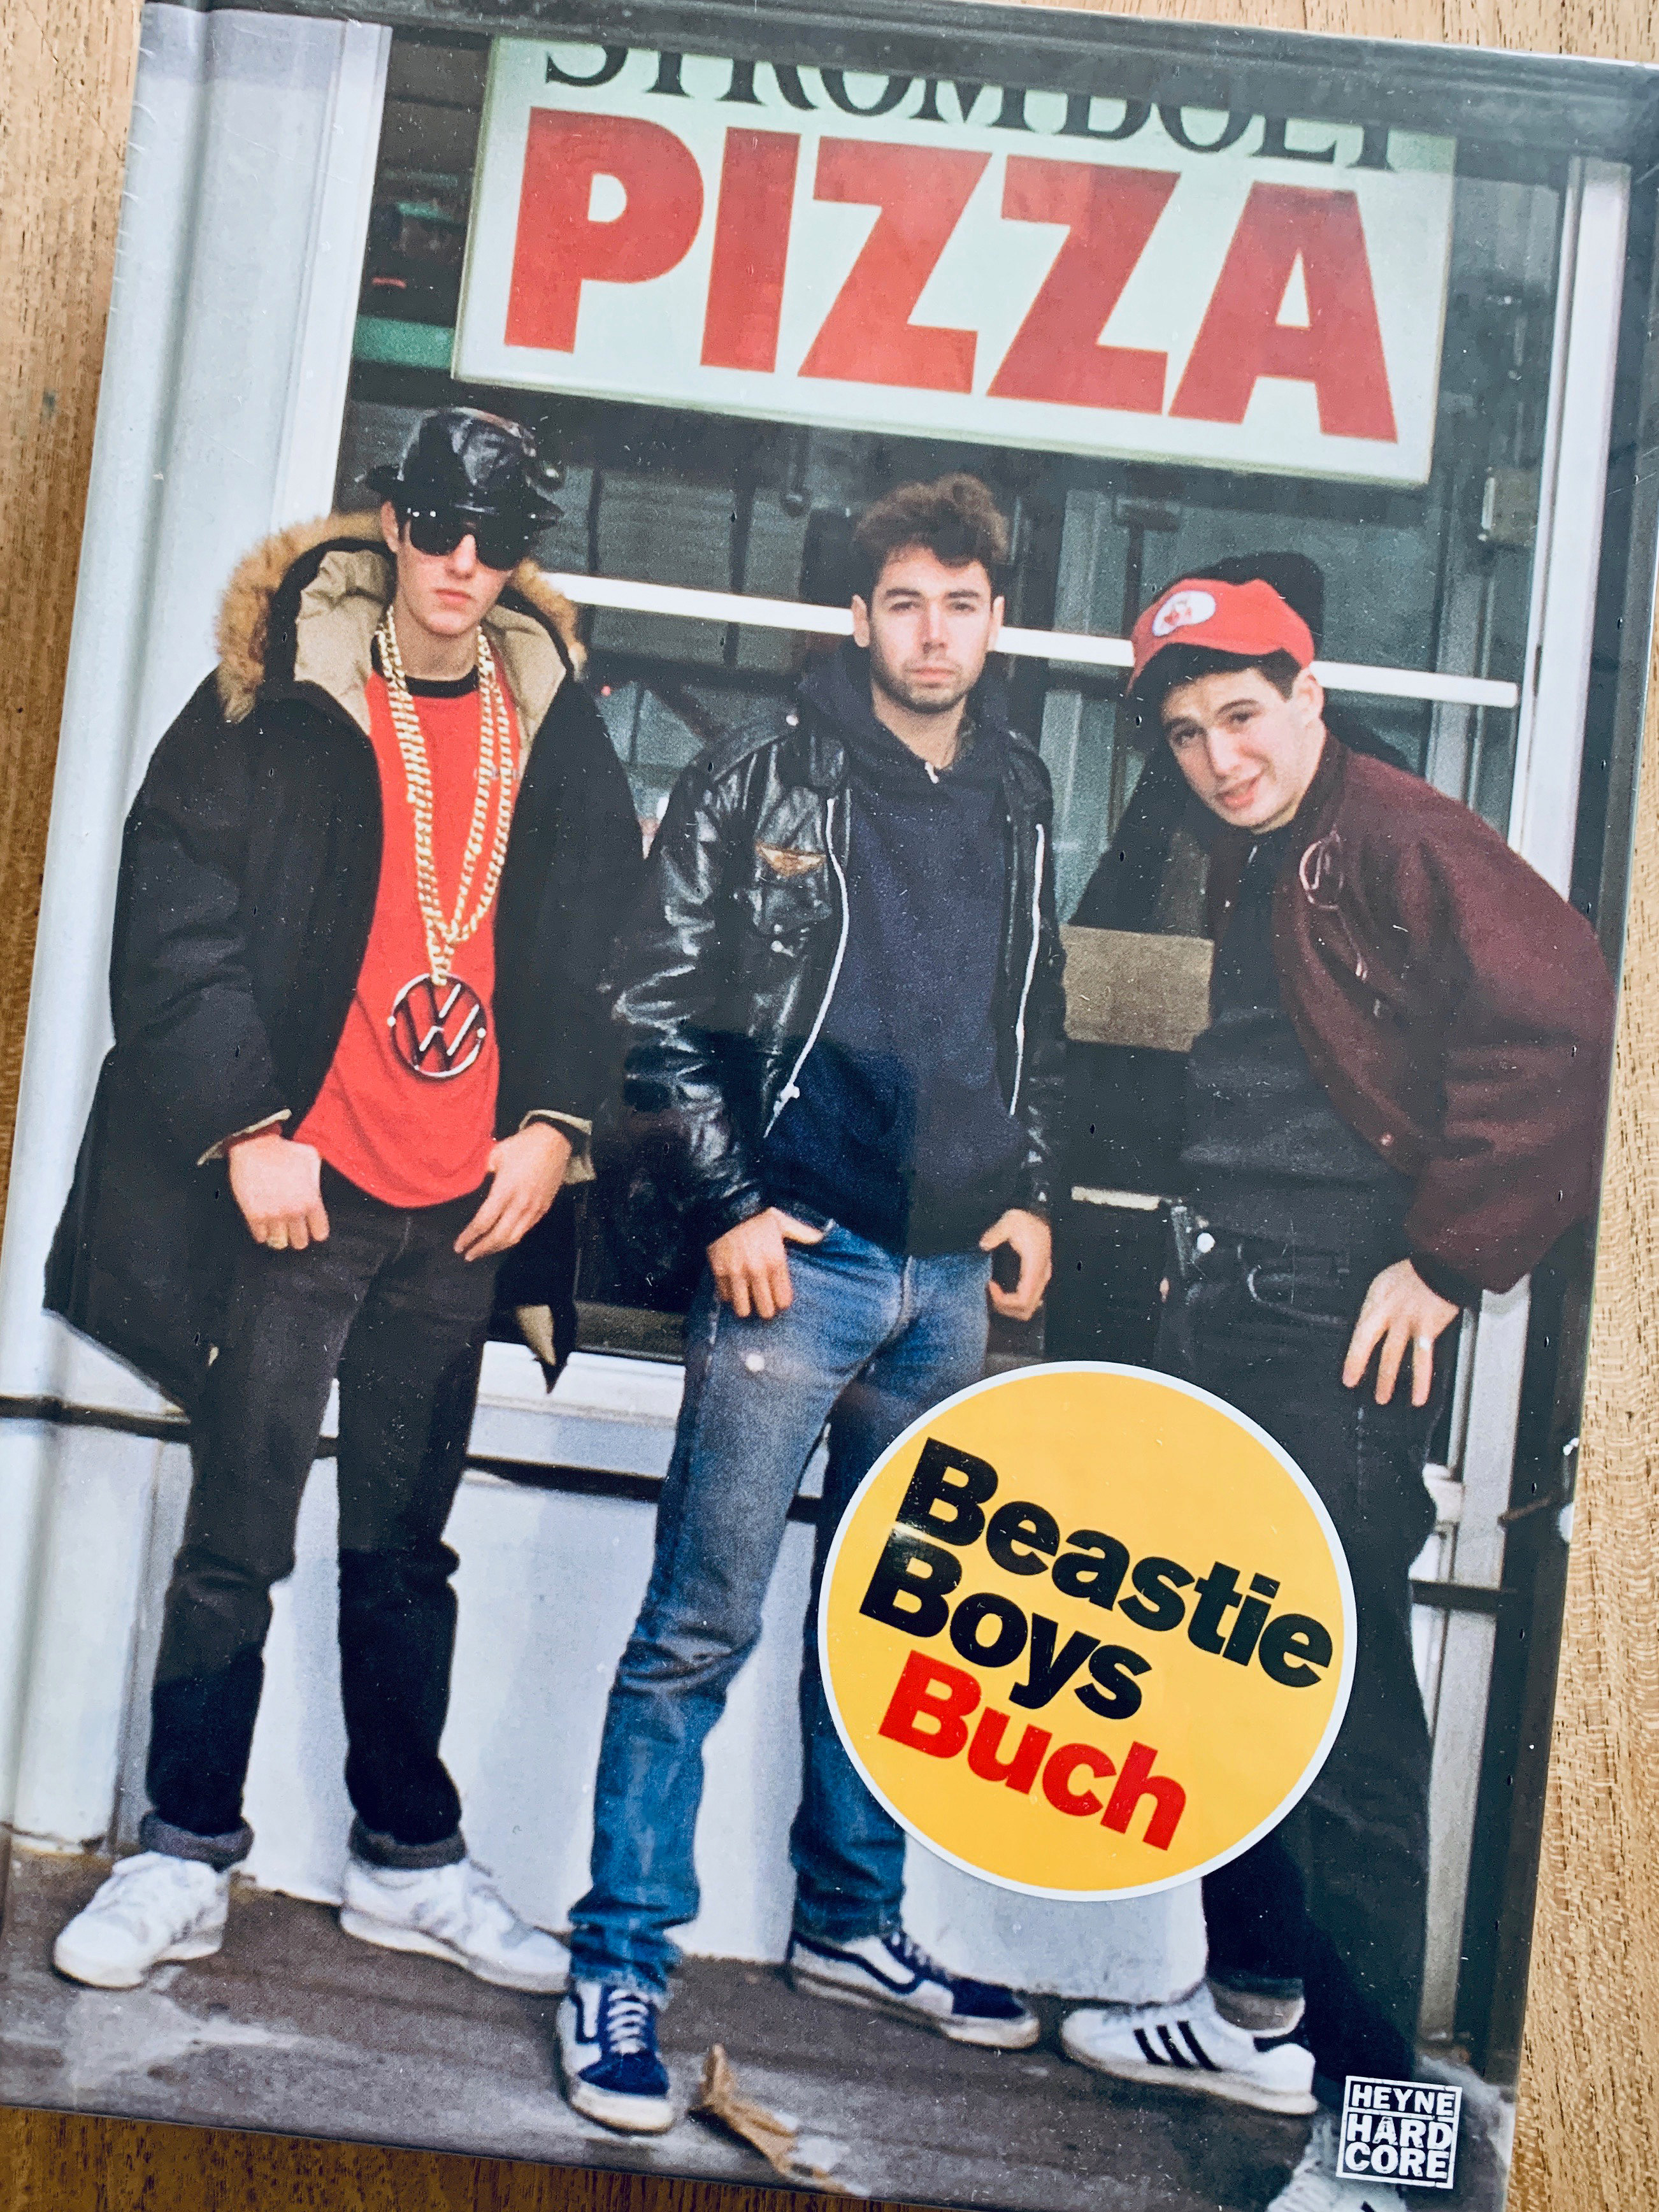 Beastie Boys Buch